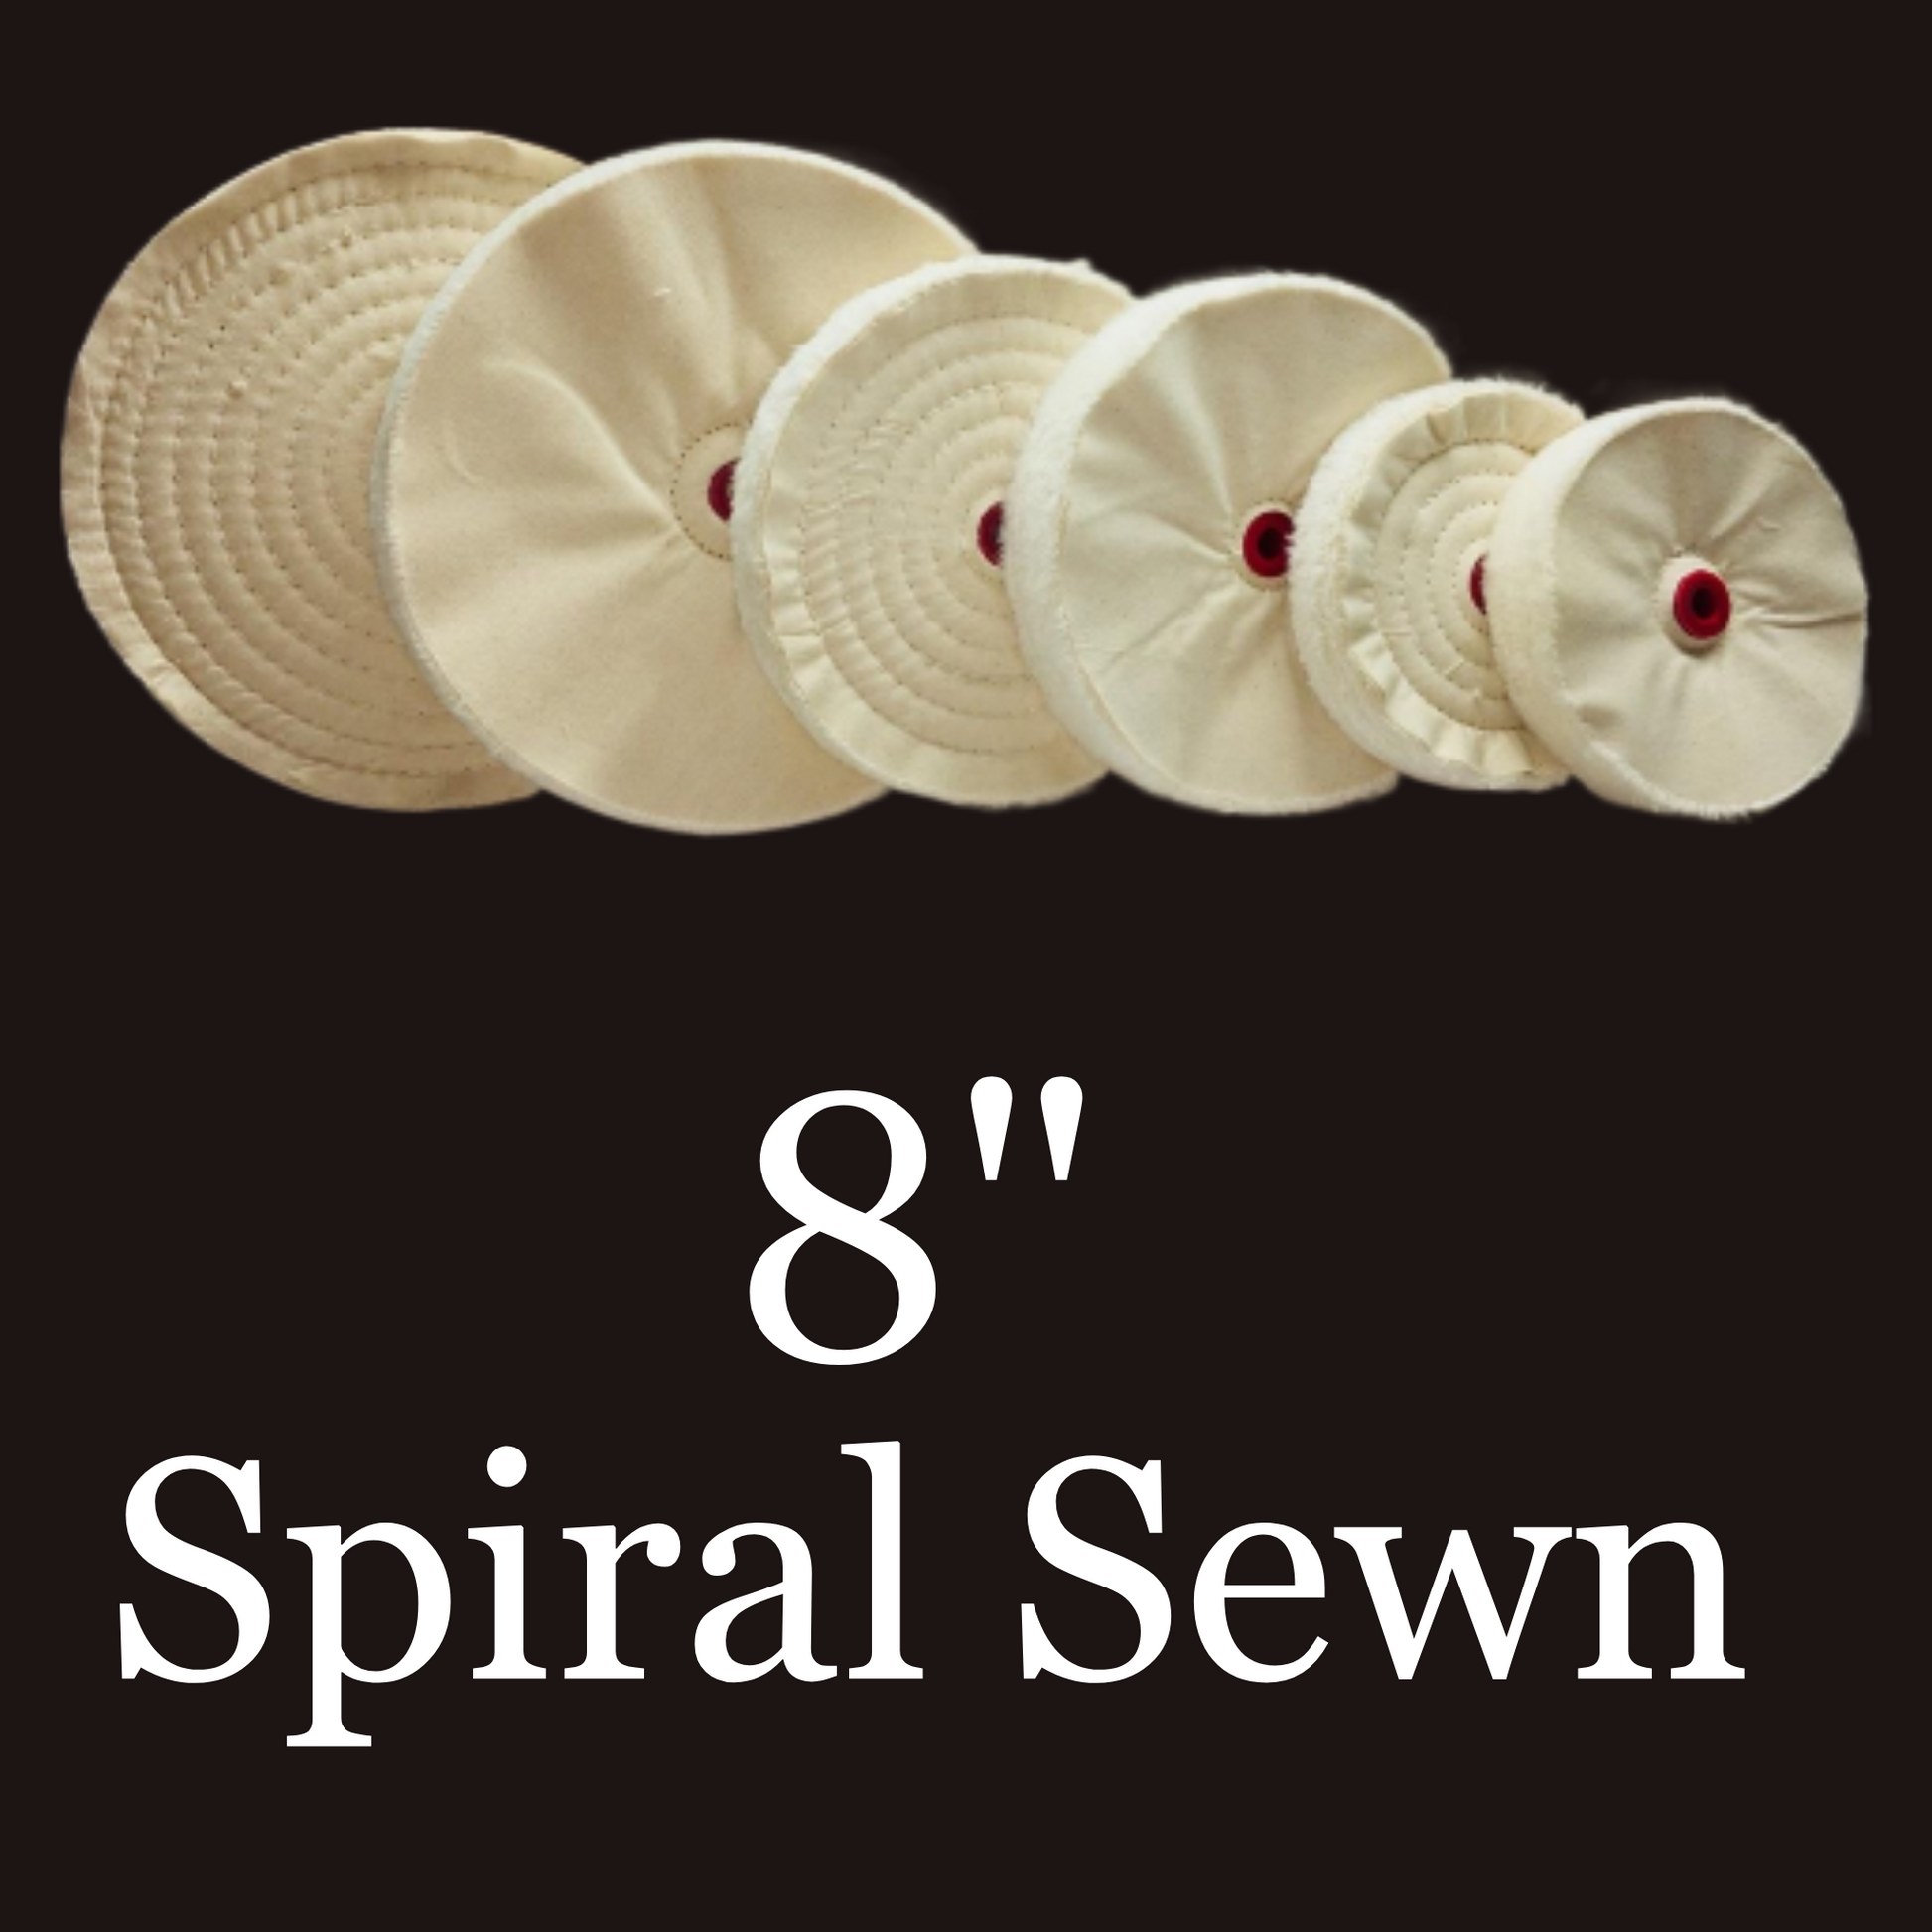 Spiral Sewn Cotton Buffing 8” Wheels